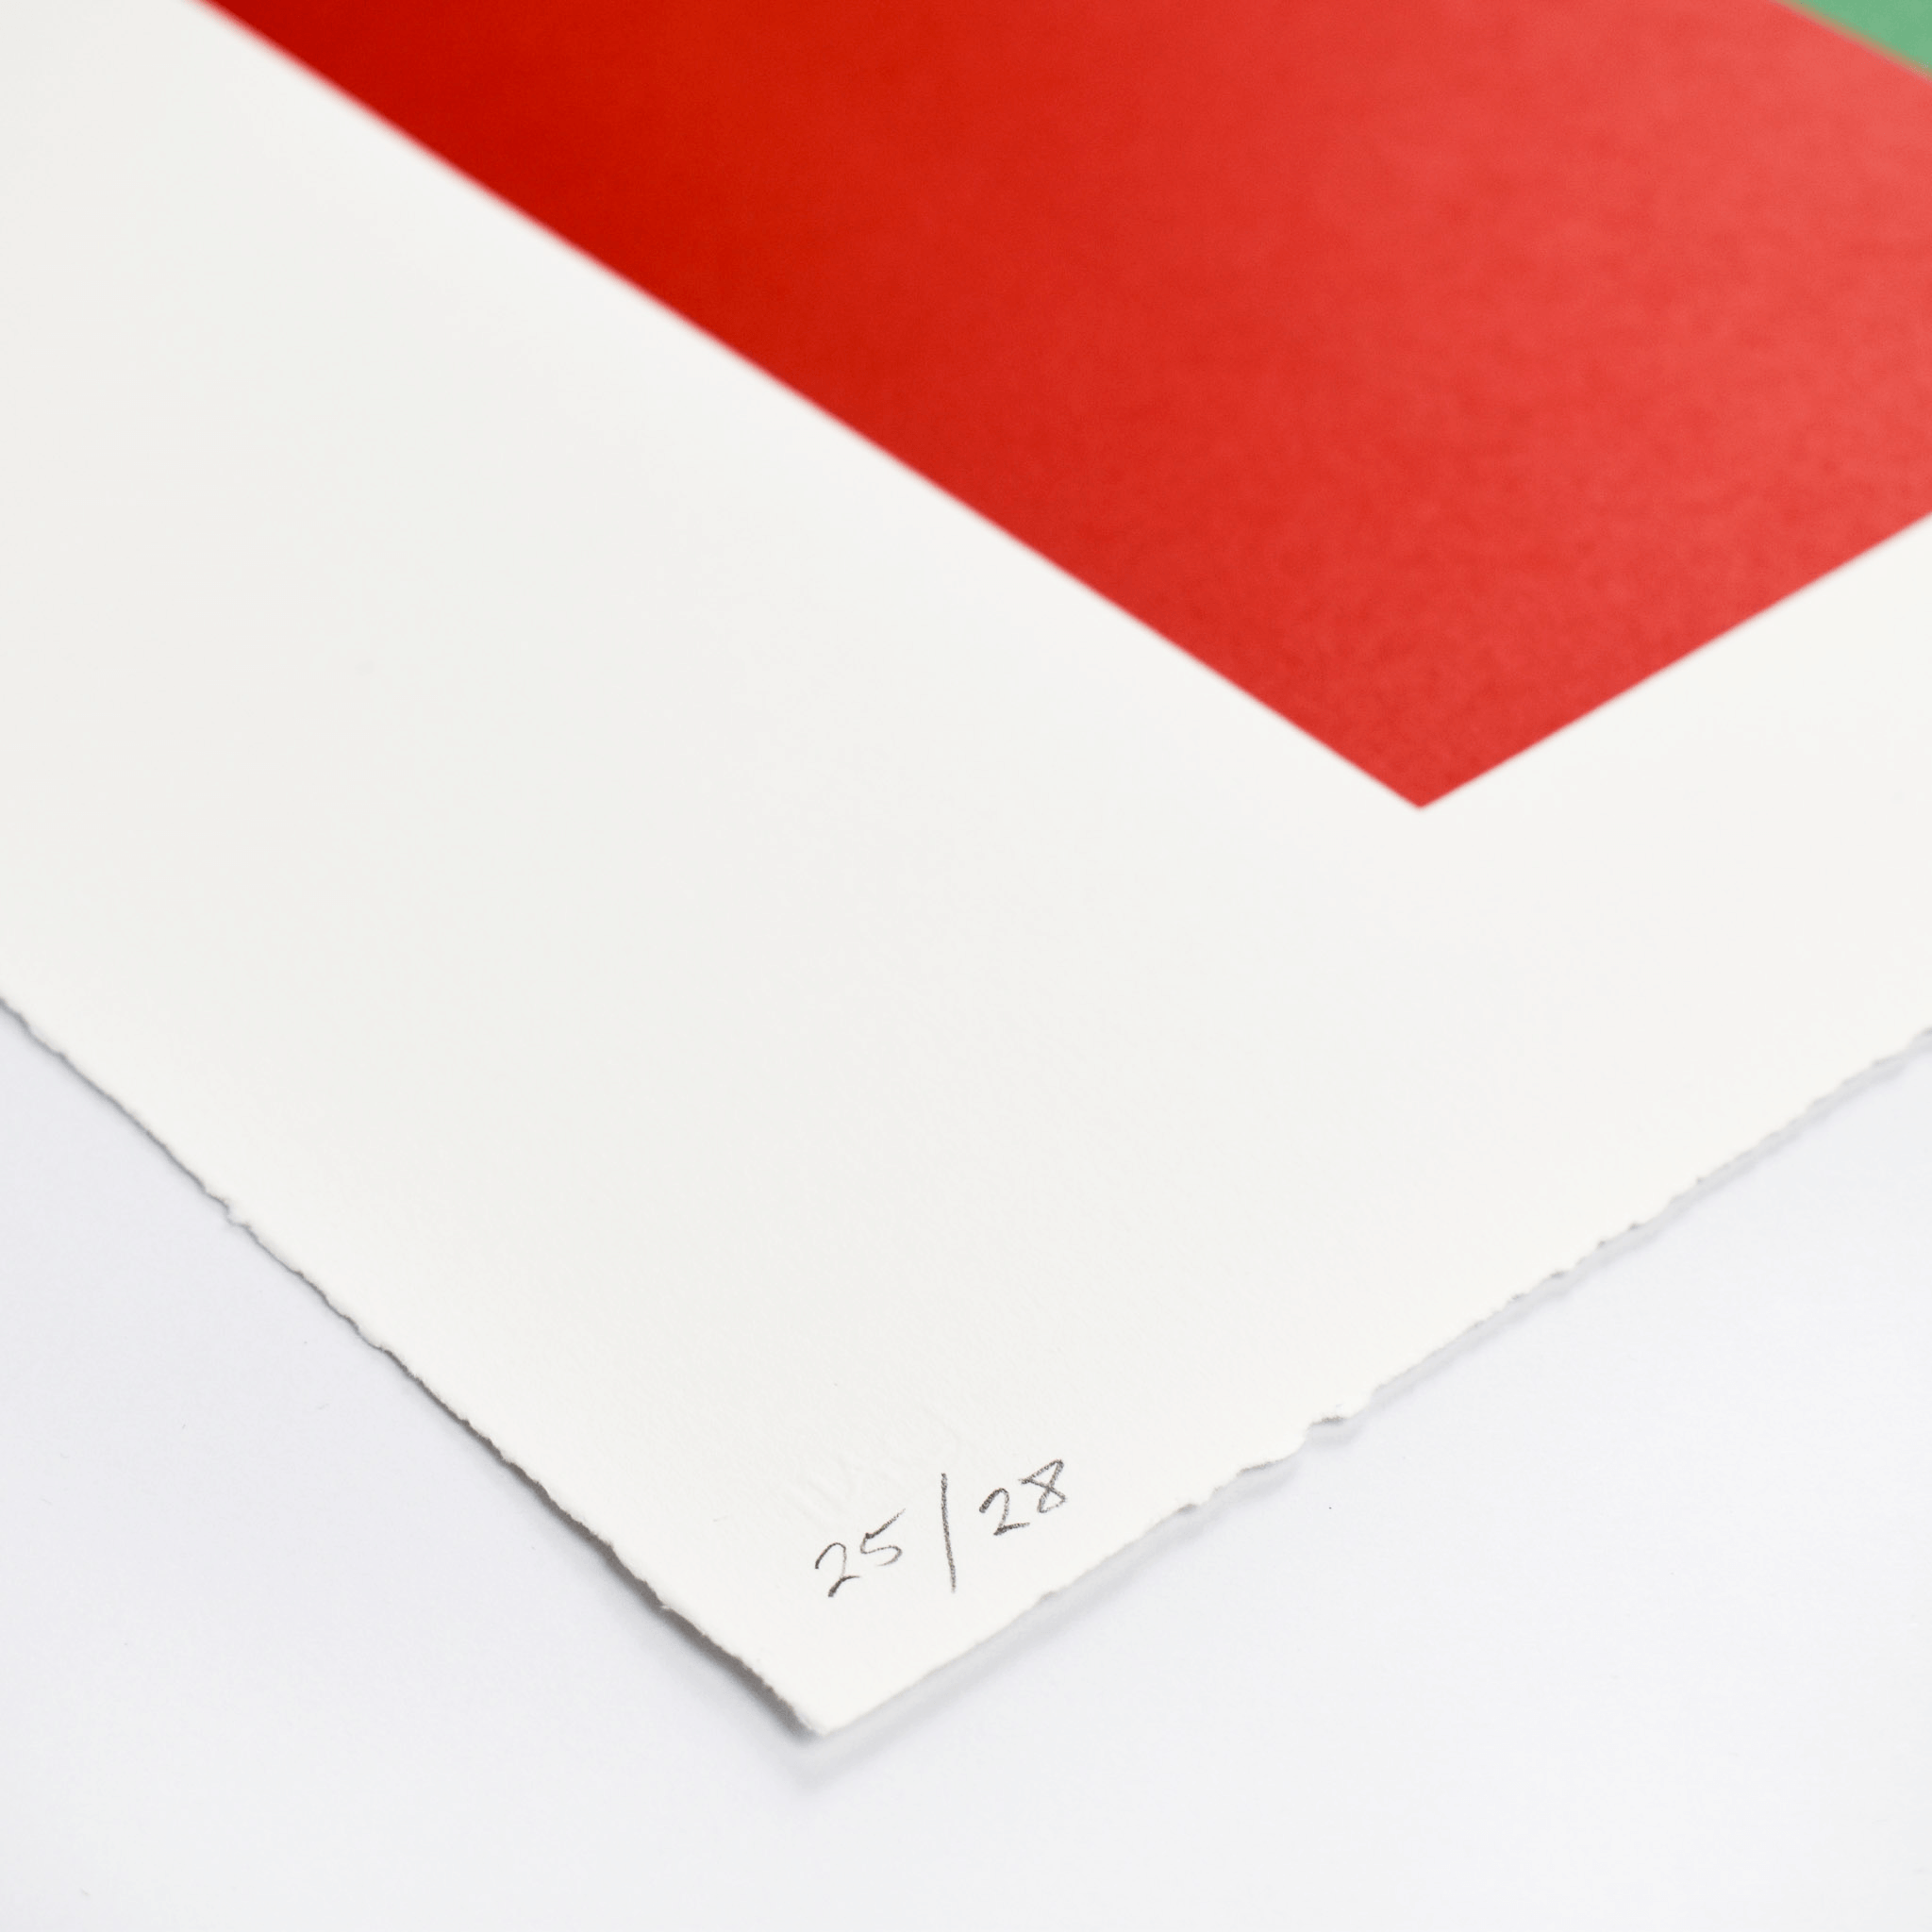 Carmen Herrera, Verde y Rojo for Studio, 2019 For Sale | Lougher Contemporary 